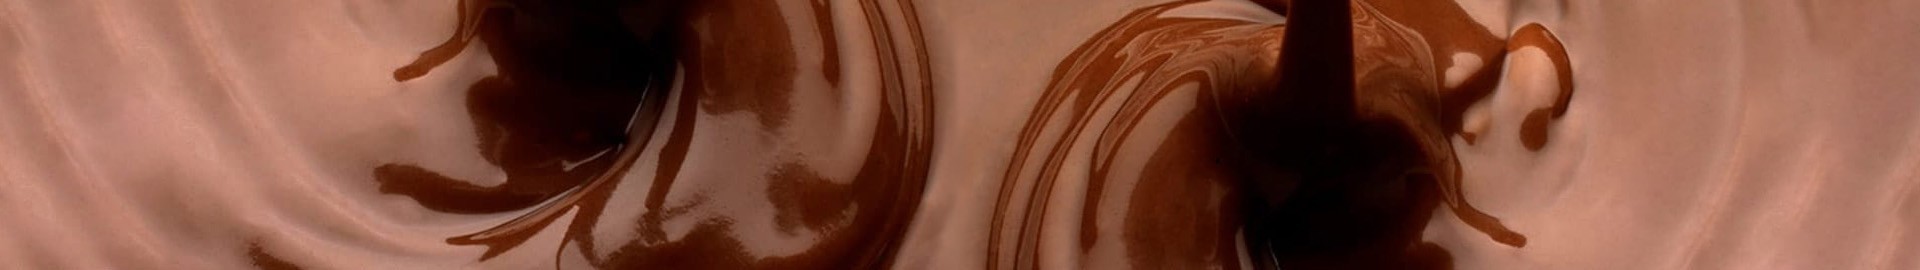 Commandez vos chocolats, confiseries et gourmandises - aliccata.com